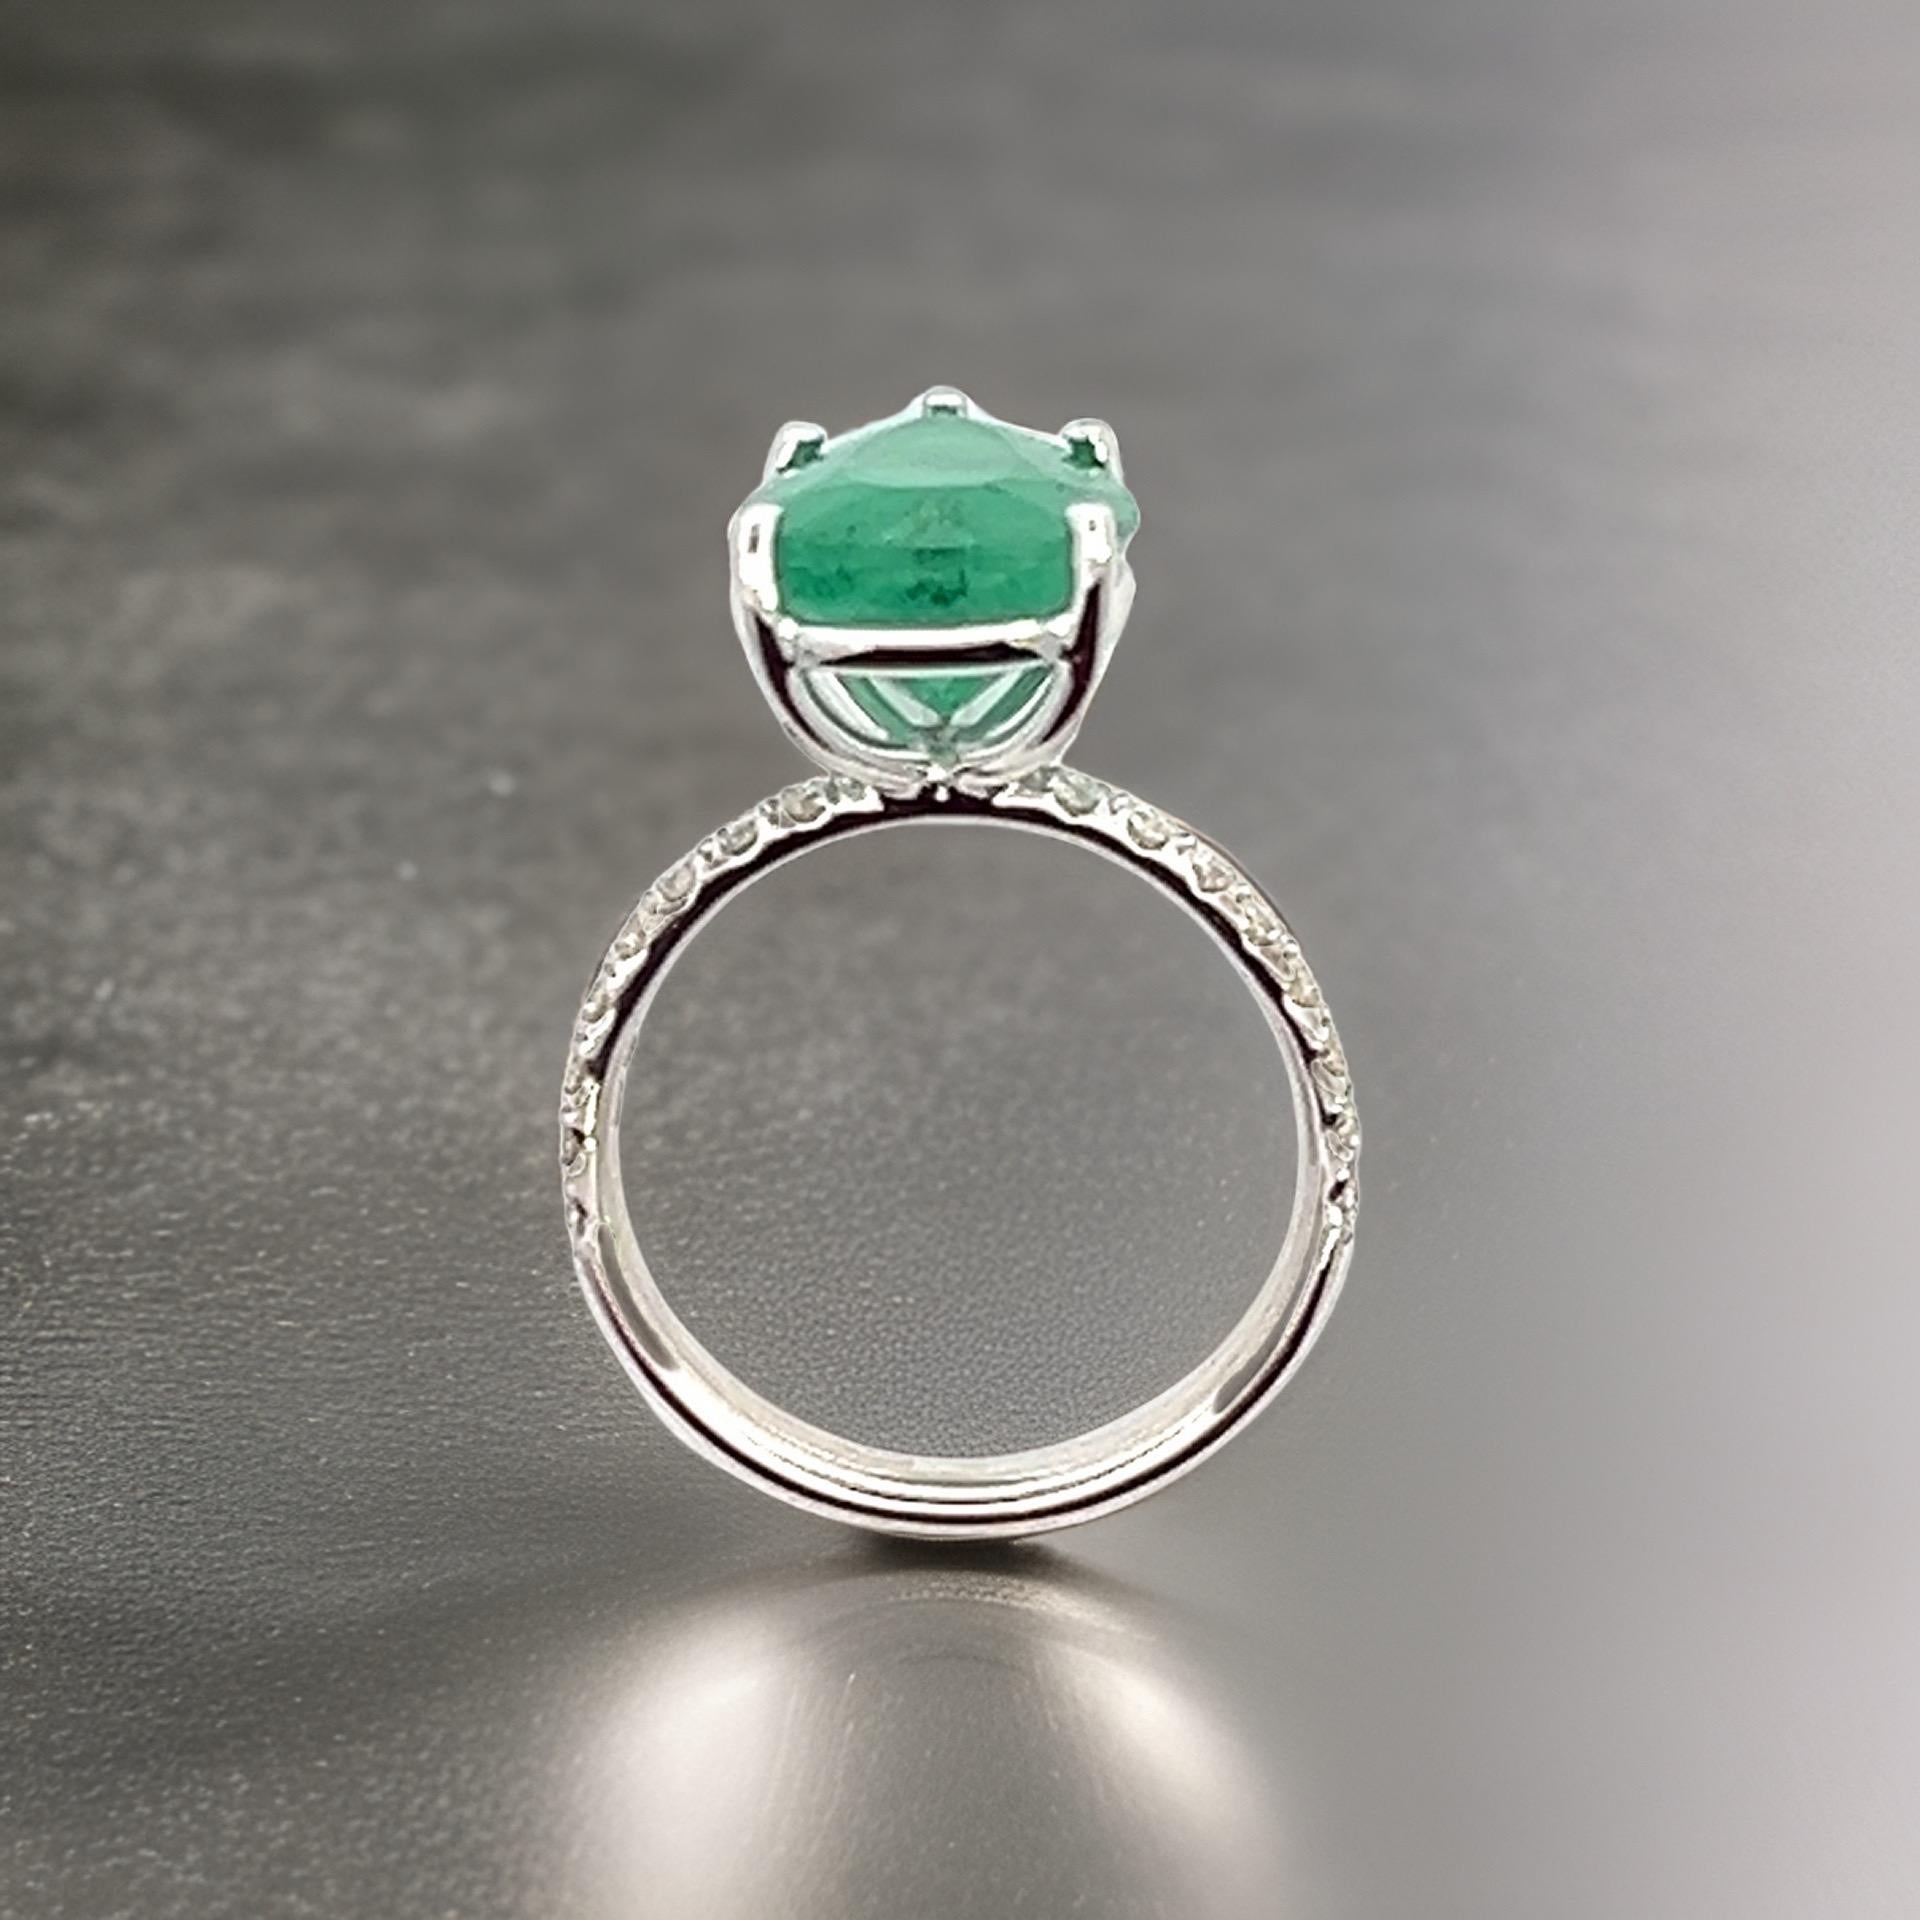 Emerald Cut Natural Emerald Diamond Ring 6.5 14k WG 4.62 TCW Certified For Sale